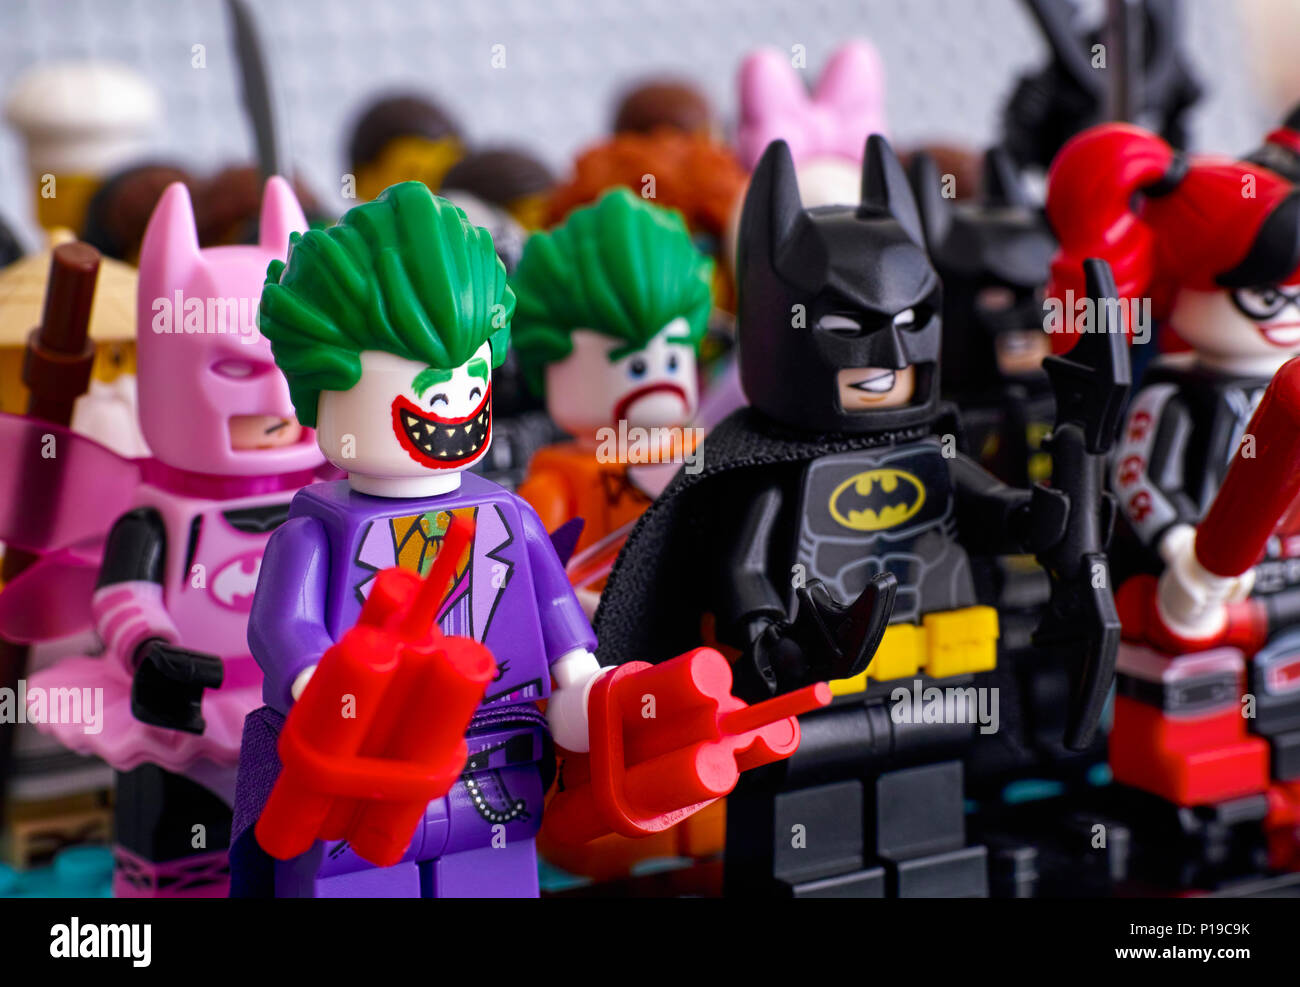  LEGO The Batman Movie Minifigure - Harley Quinn (Pigtails)  2016! : Toys & Games